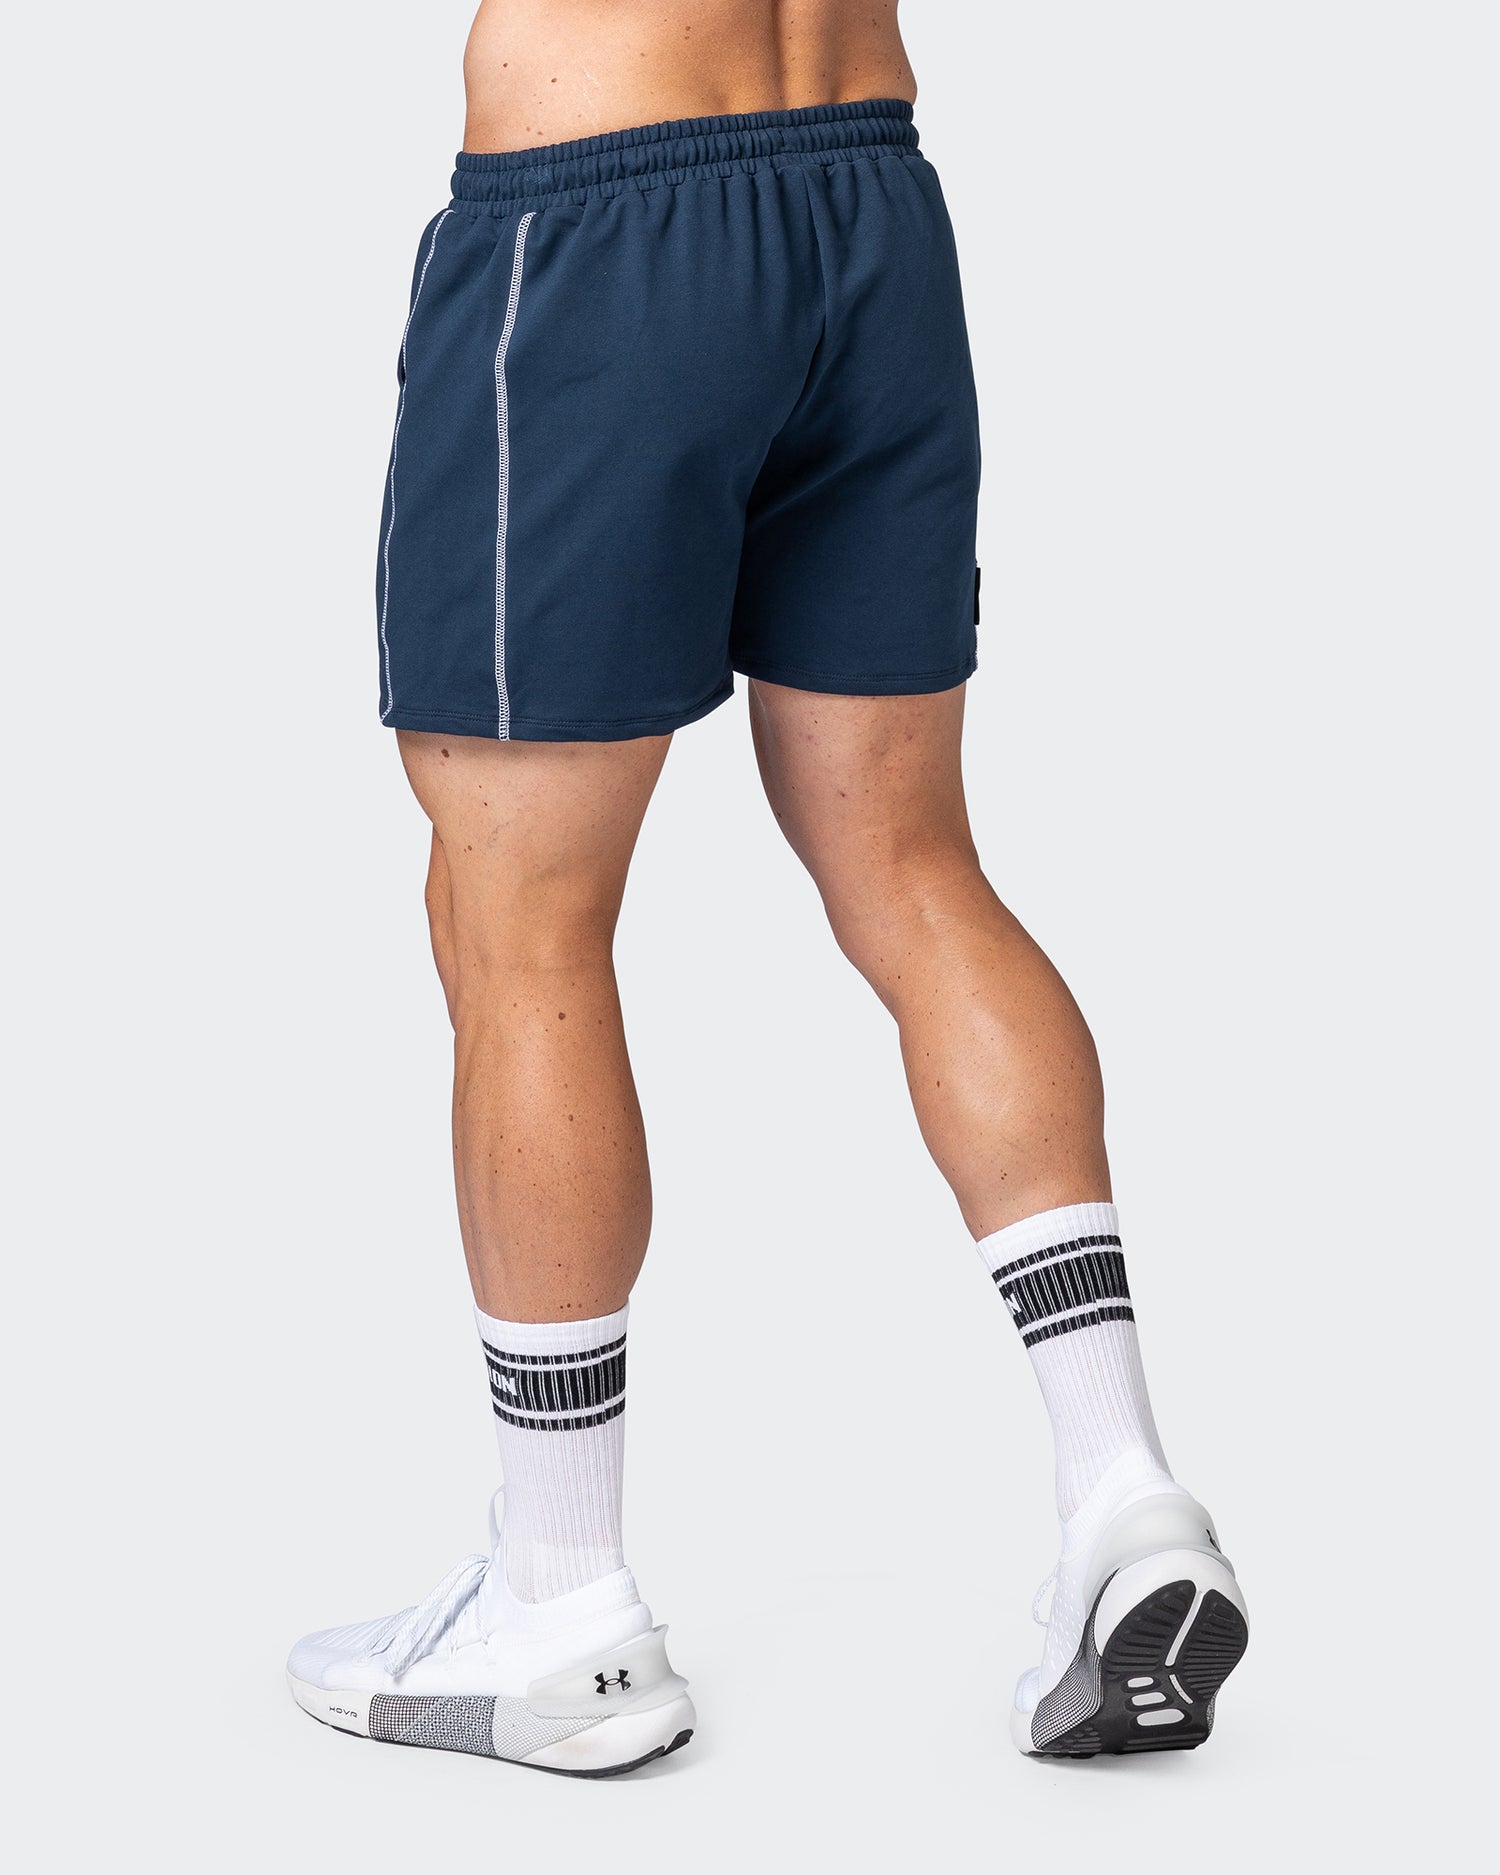 Classic Squat Shorts - Sapphire